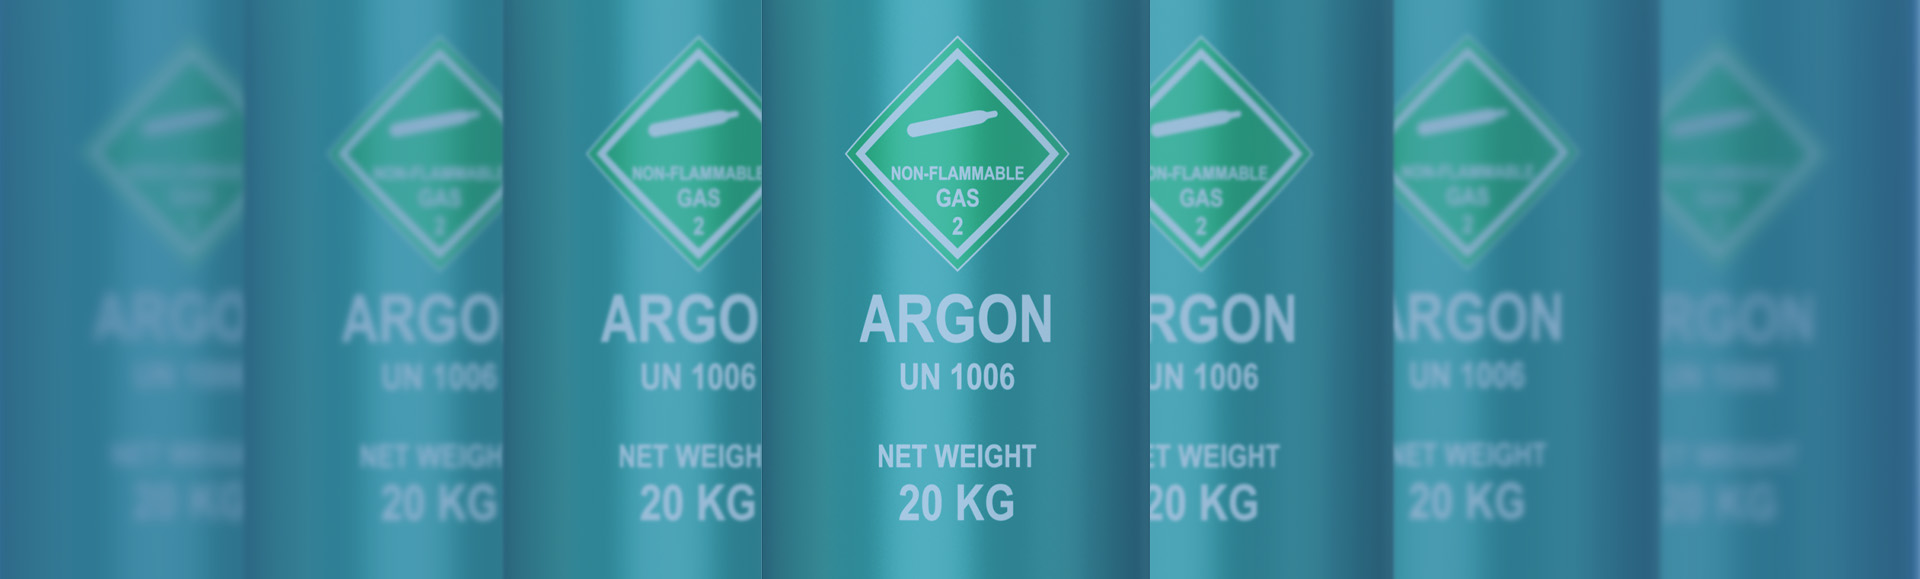 IMG - Buy Argon Gas Seychelles